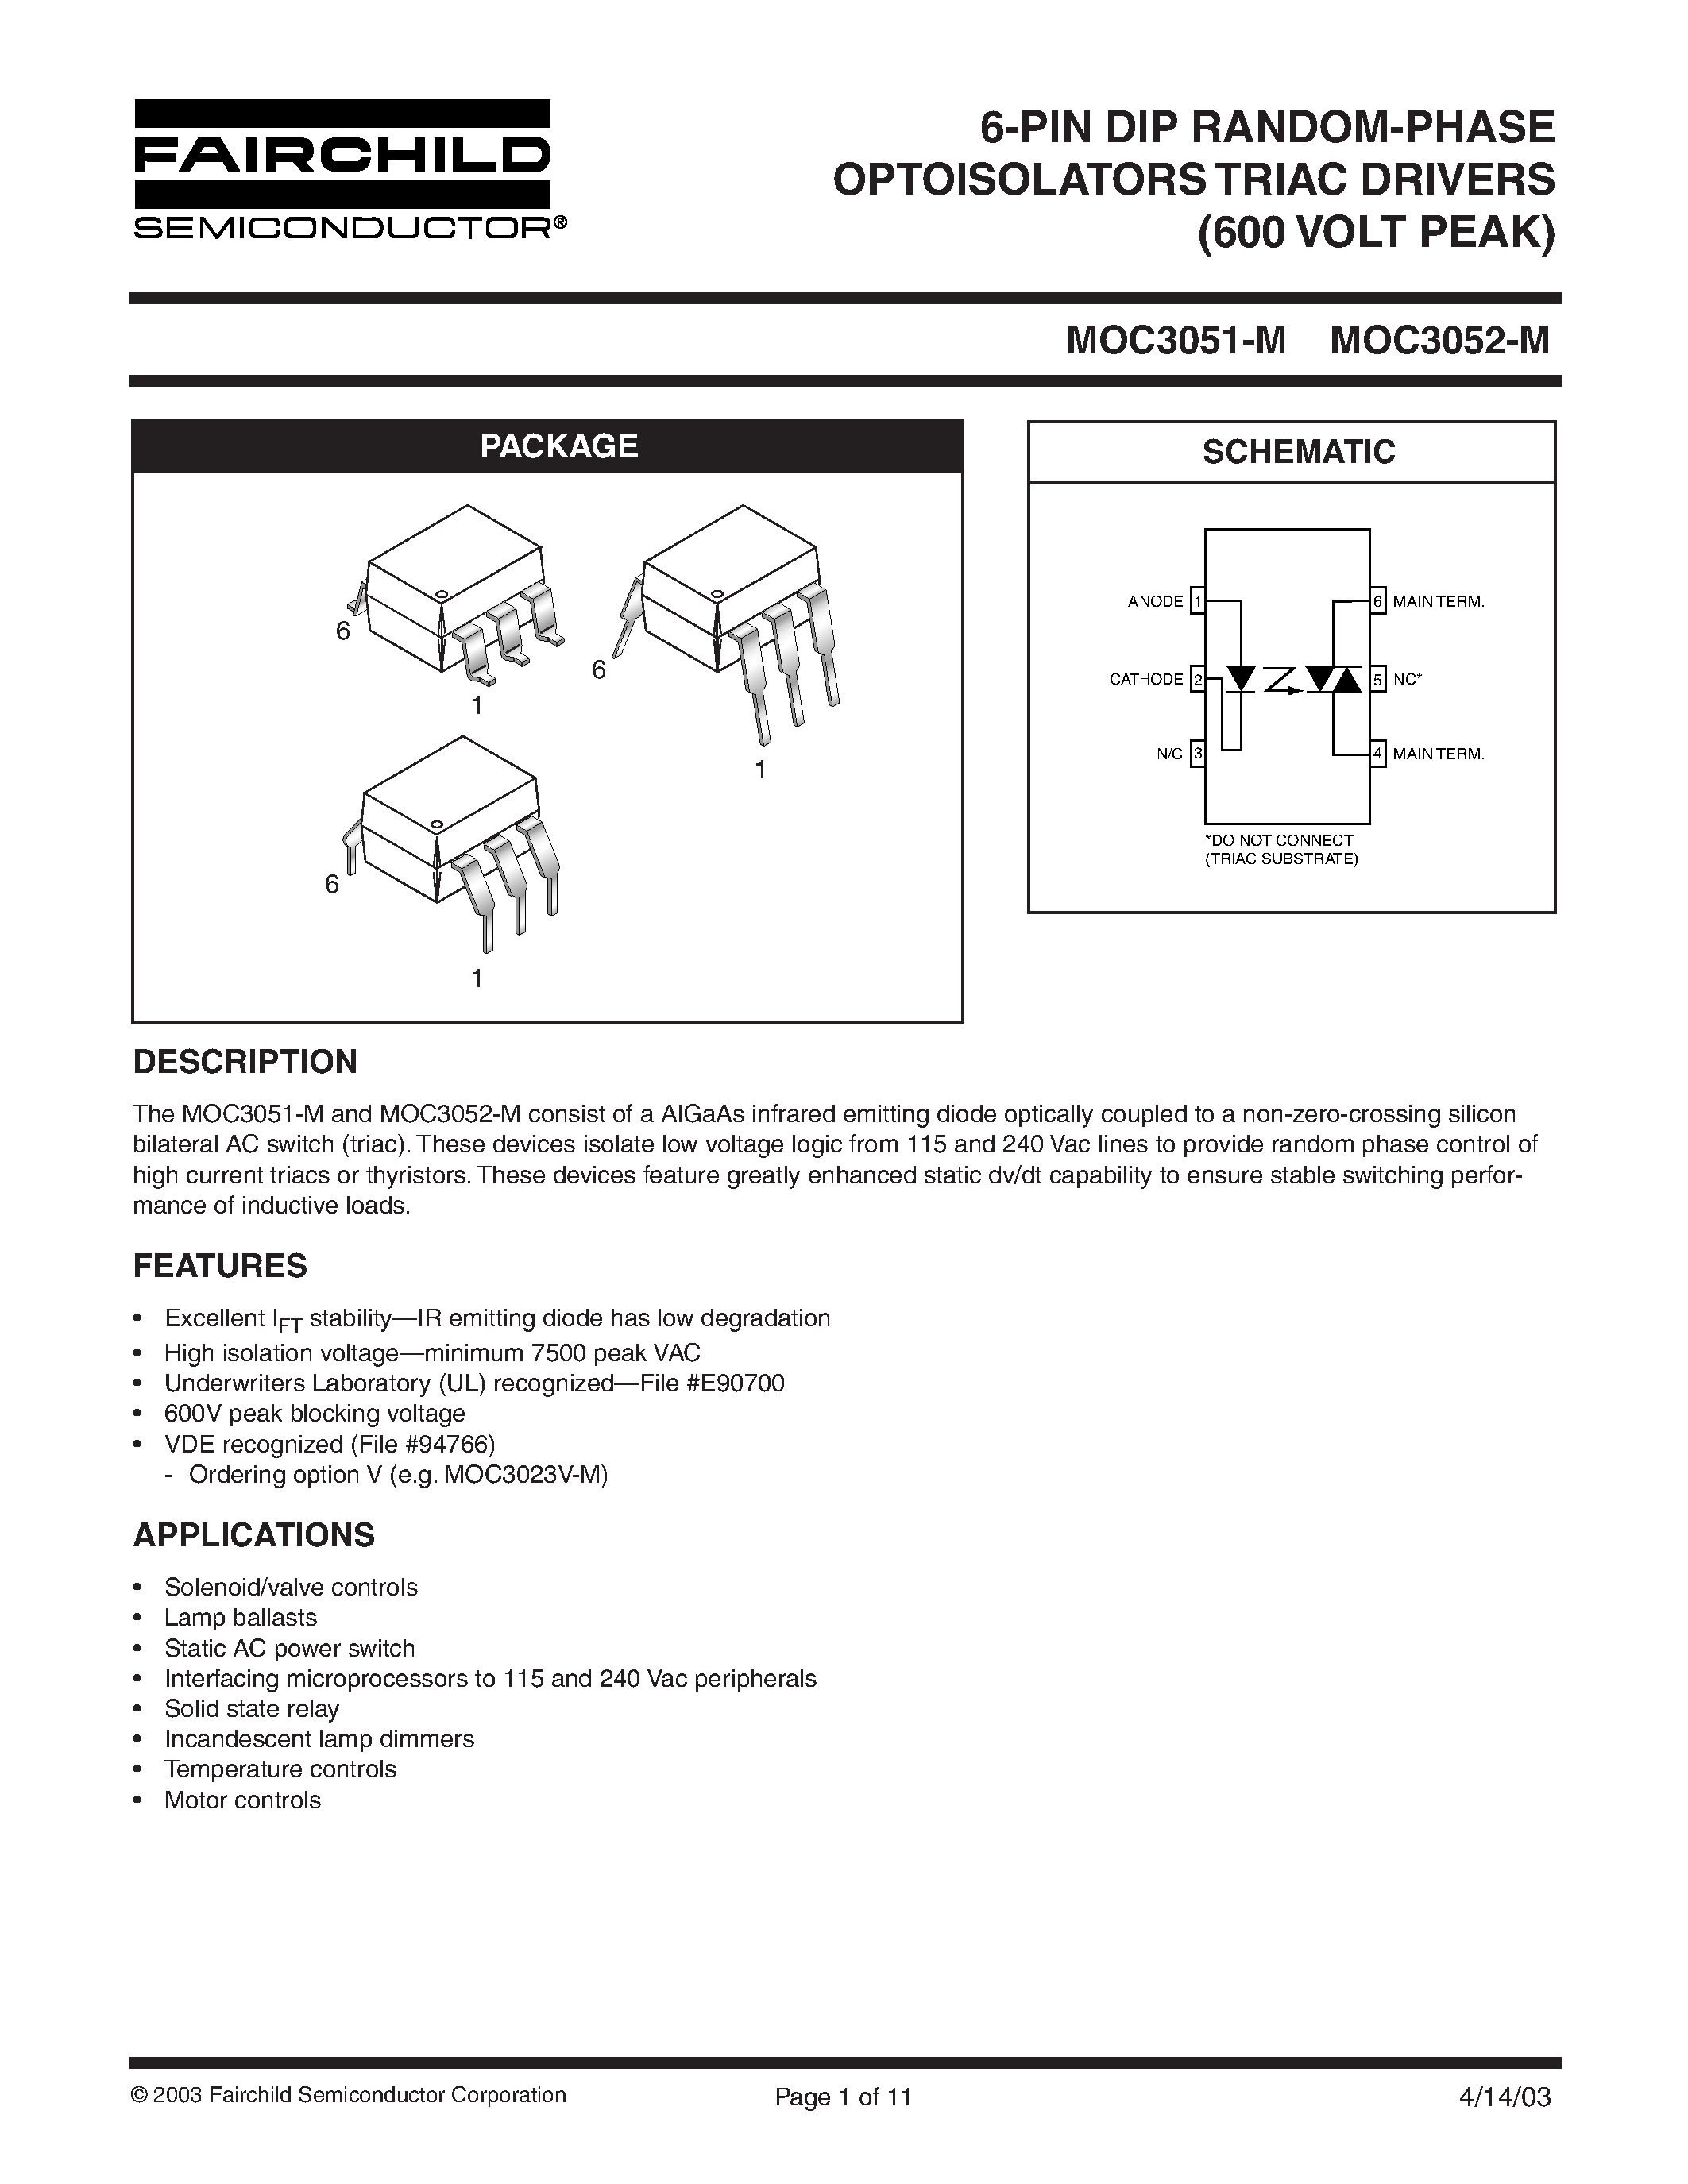 Datasheet MOC3051-M - (MOC3051-M / MOC3052-M) 6-PIN DIP RANDOM-PHASE OPTOISOLATORS TRIAC DRIVERS (600 VOLT PEAK) page 1